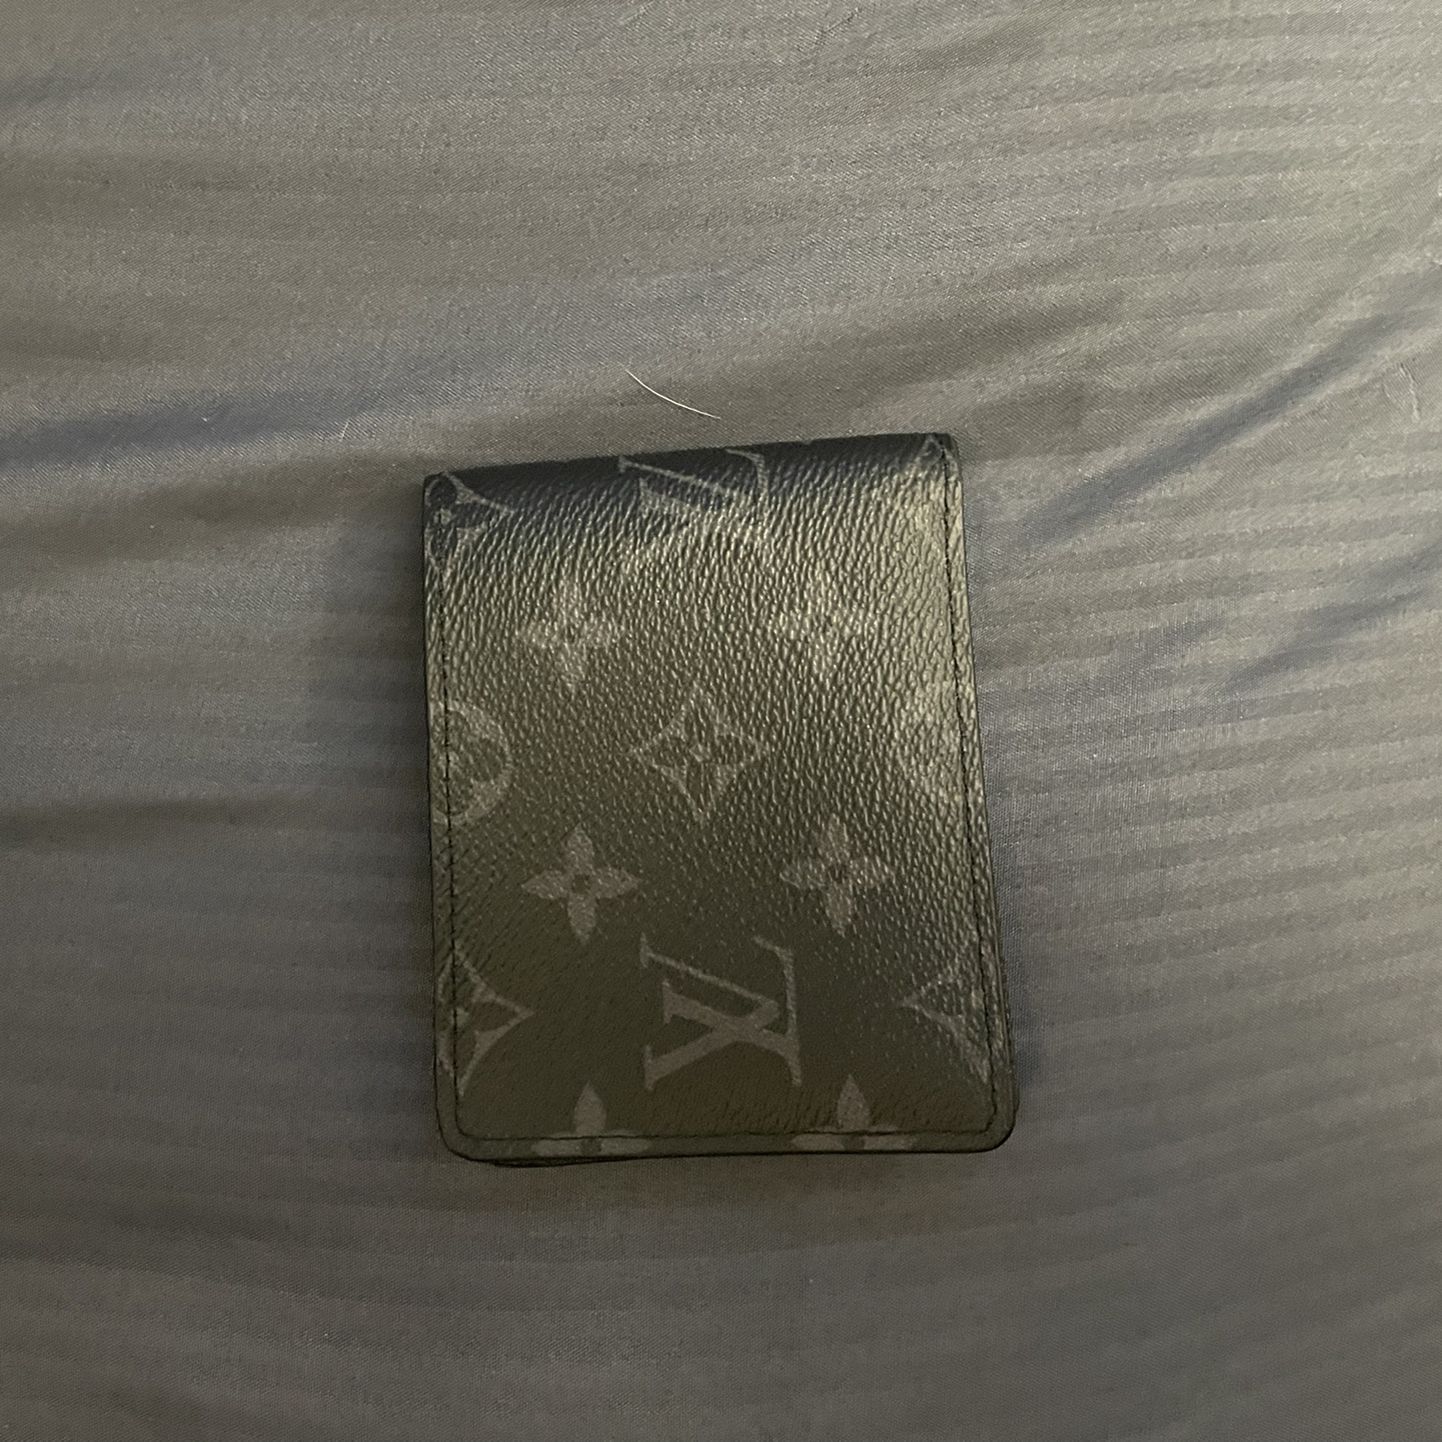 Louis Vuitton Multiple Wallet Grey for Sale in Miami Beach, FL